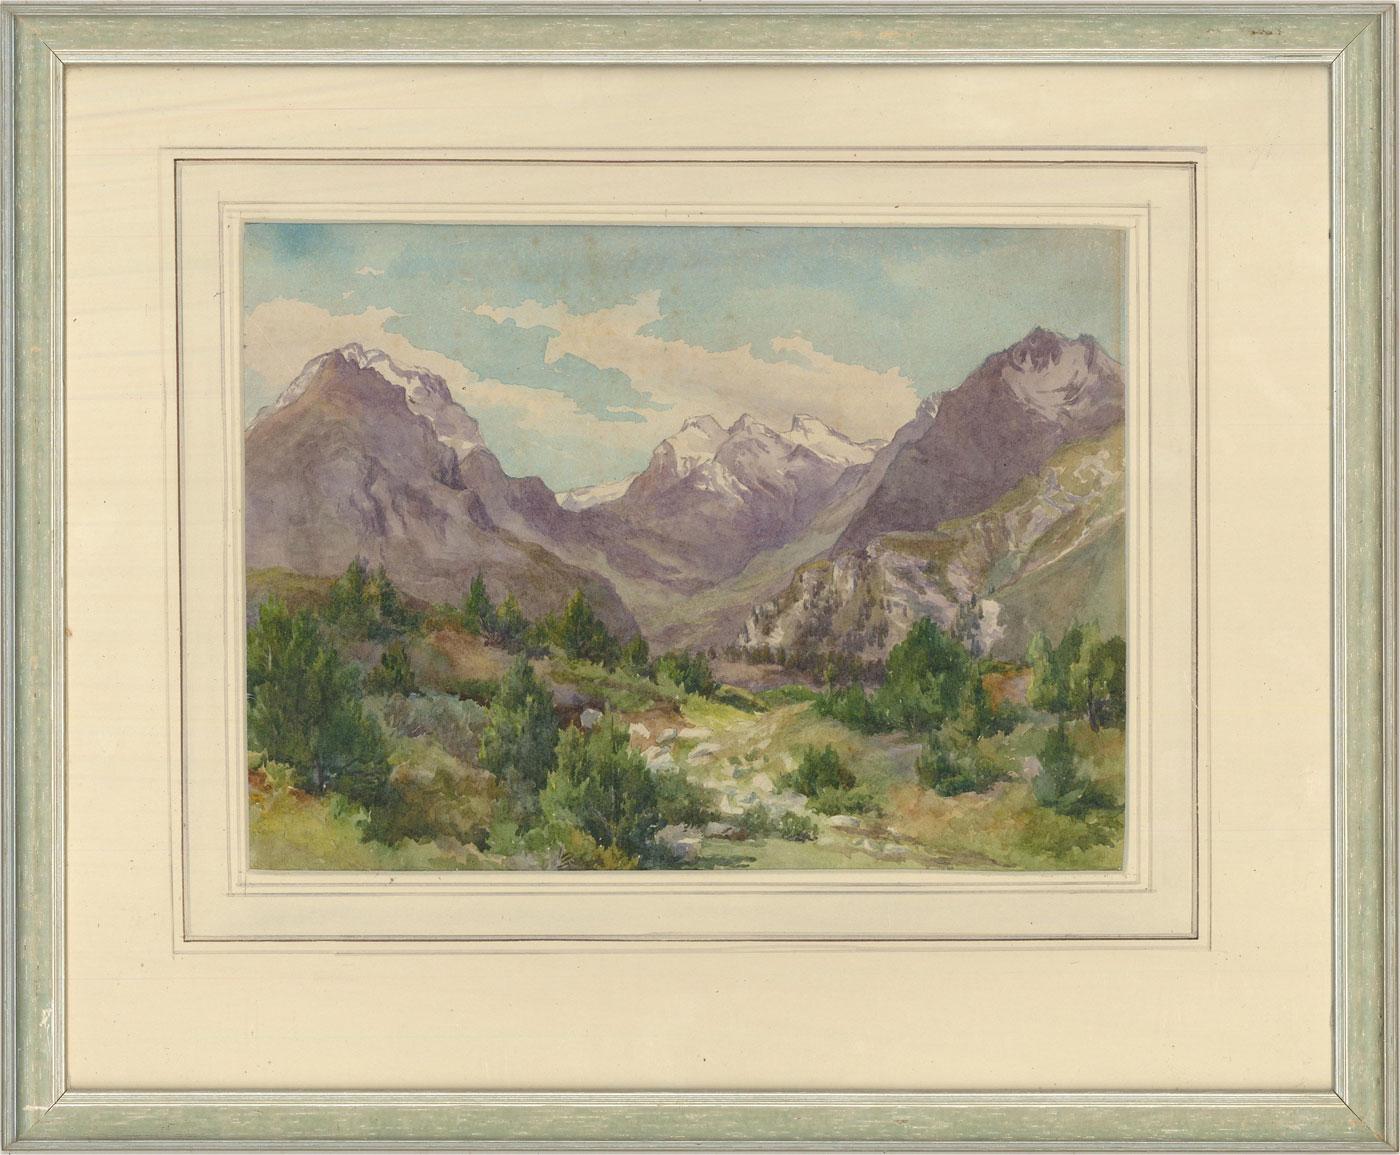 Unknown Landscape Art - 1859 Watercolour - Maloja Mountain Pass